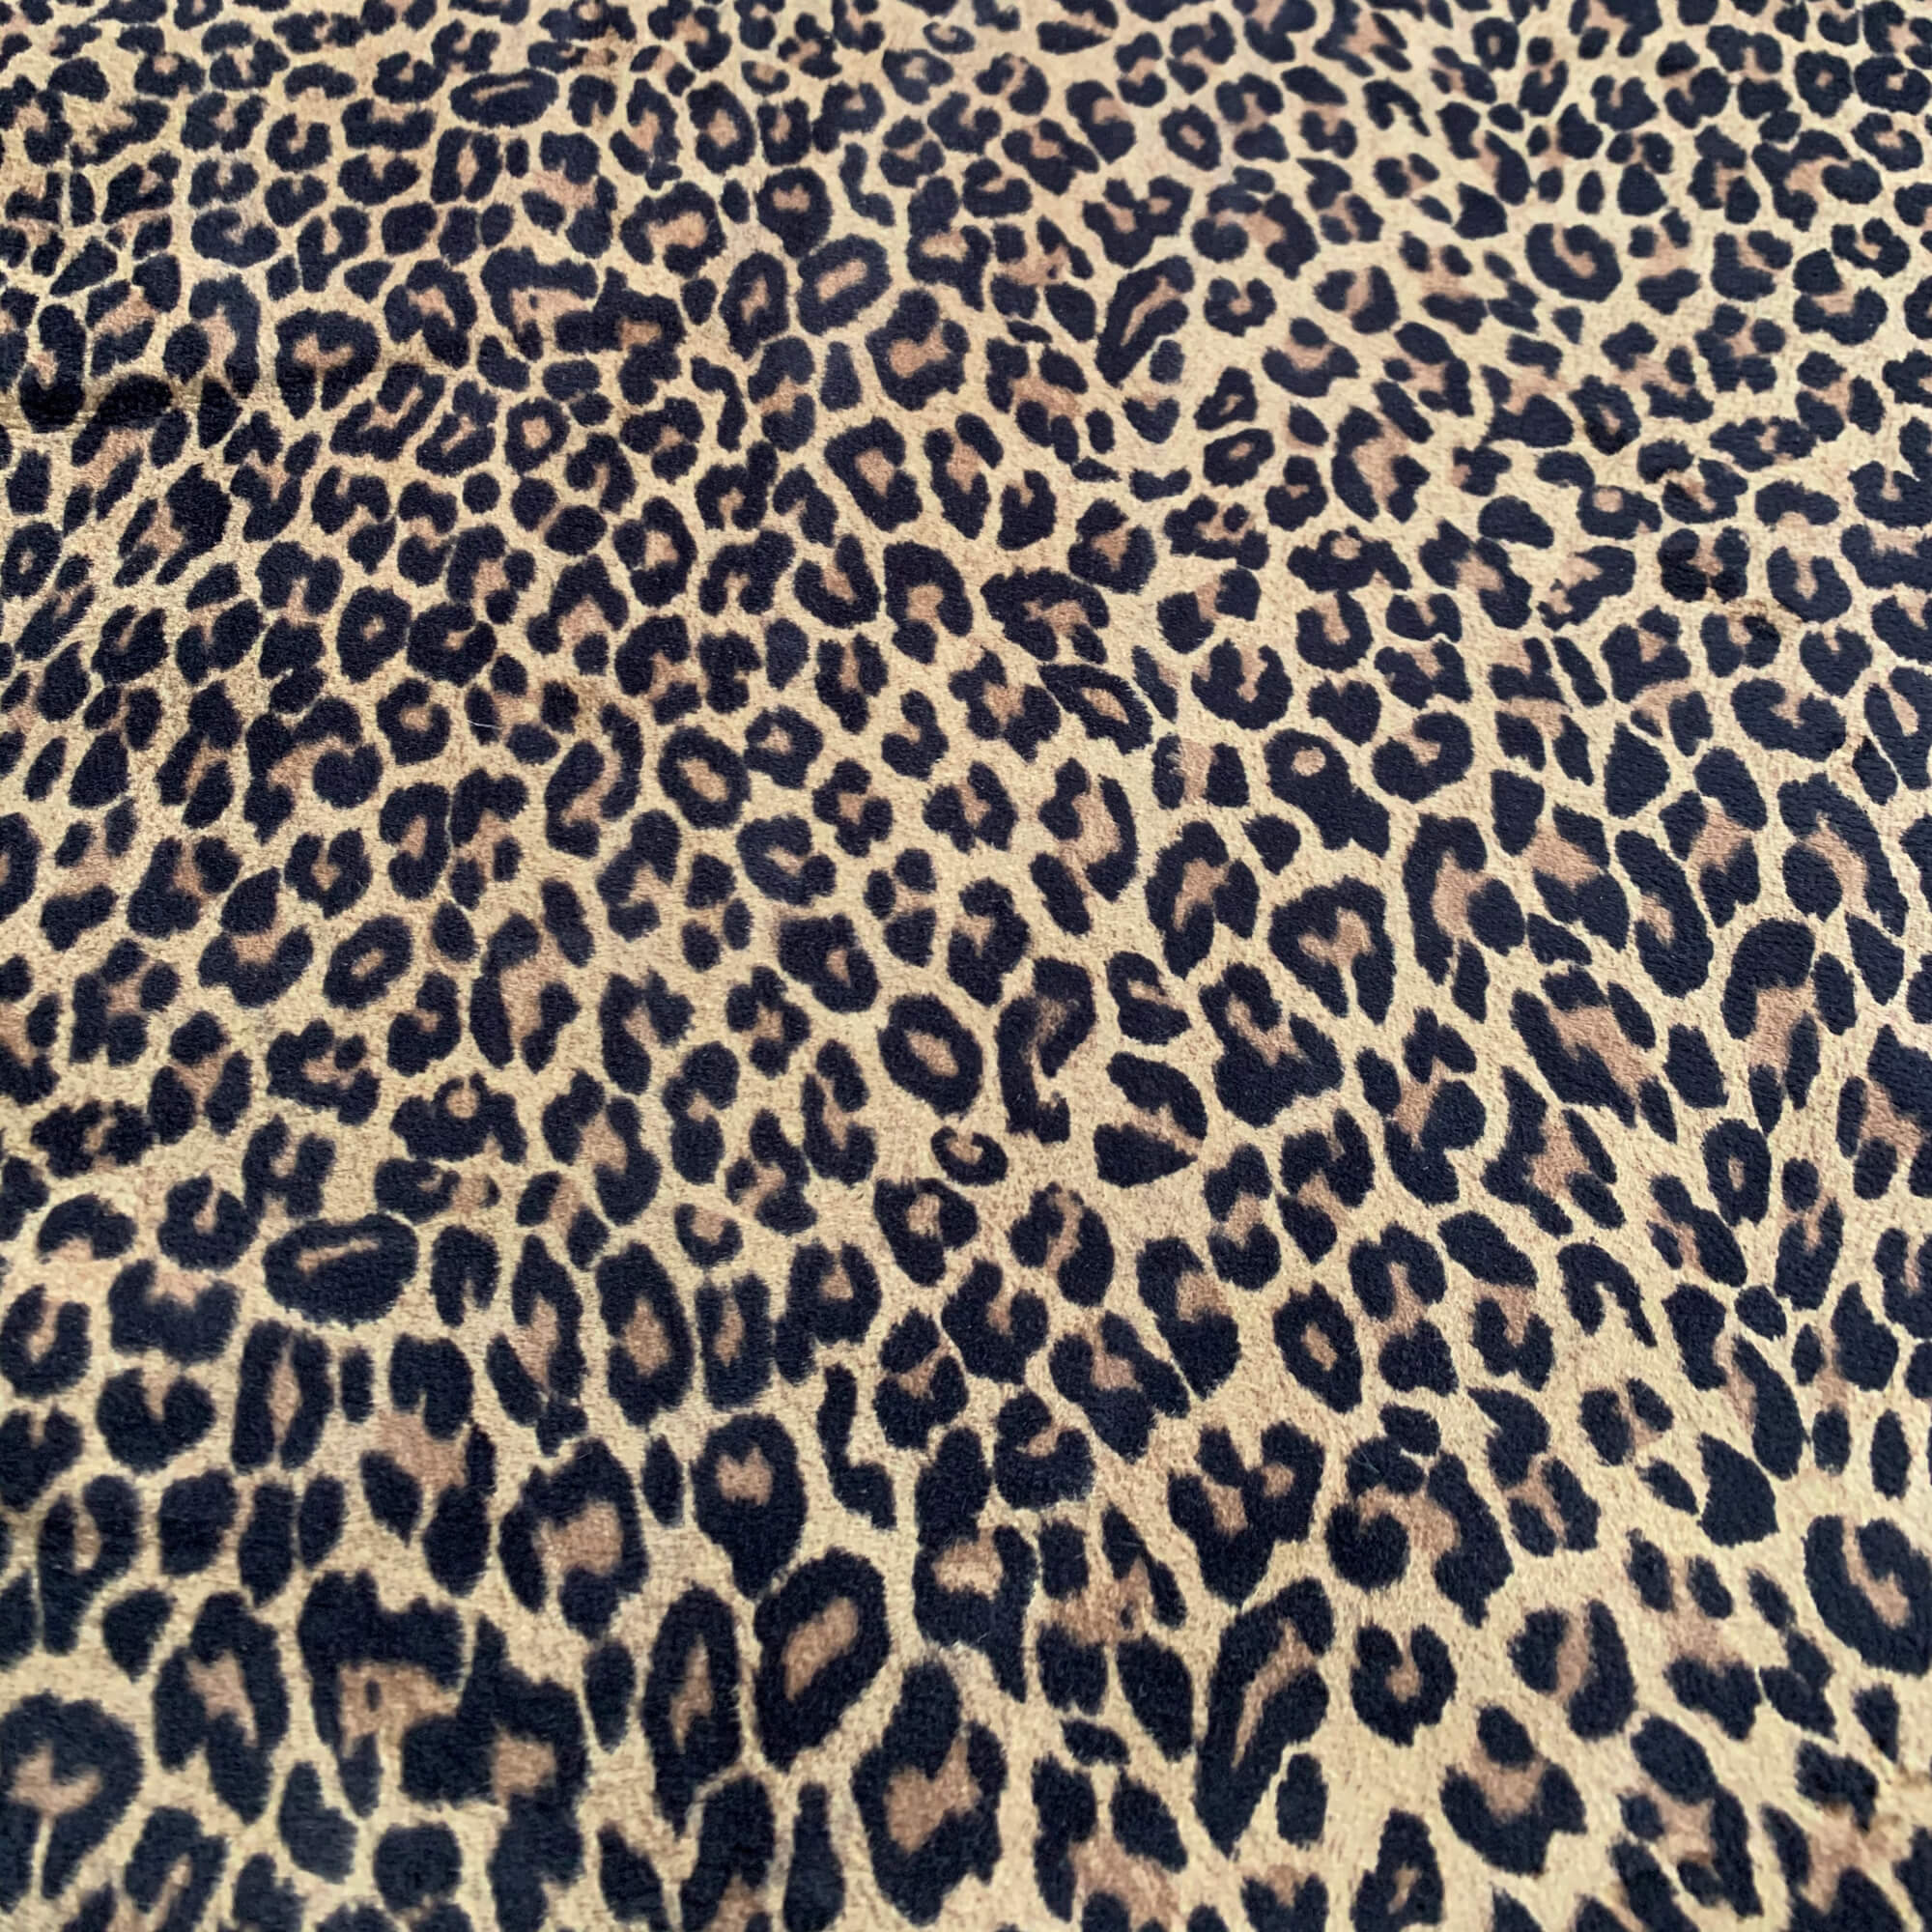 Suede Leopard Print Leather Hides